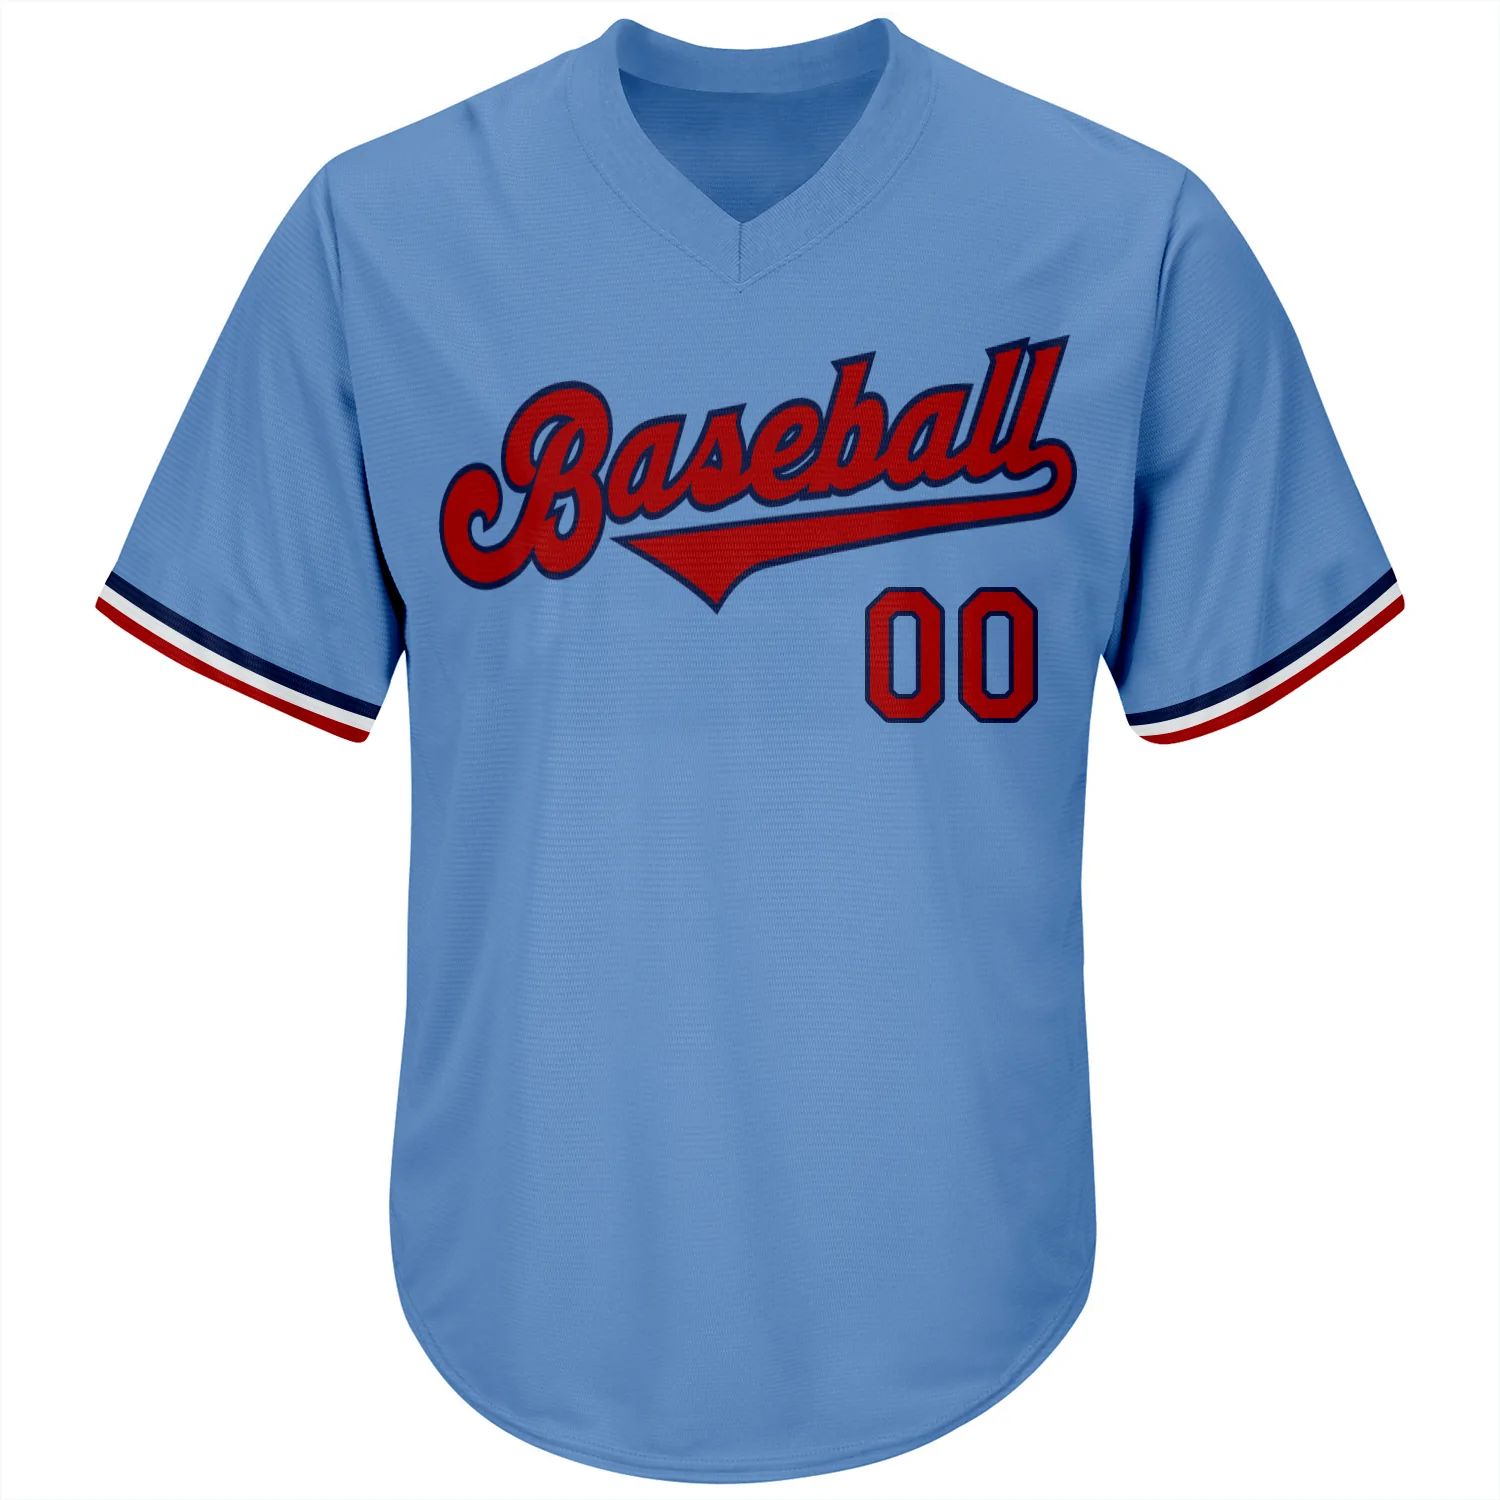 build-navy-light-blue-baseball-red-jersey-authentic-throwback-elightblue00306-online-2.jpg